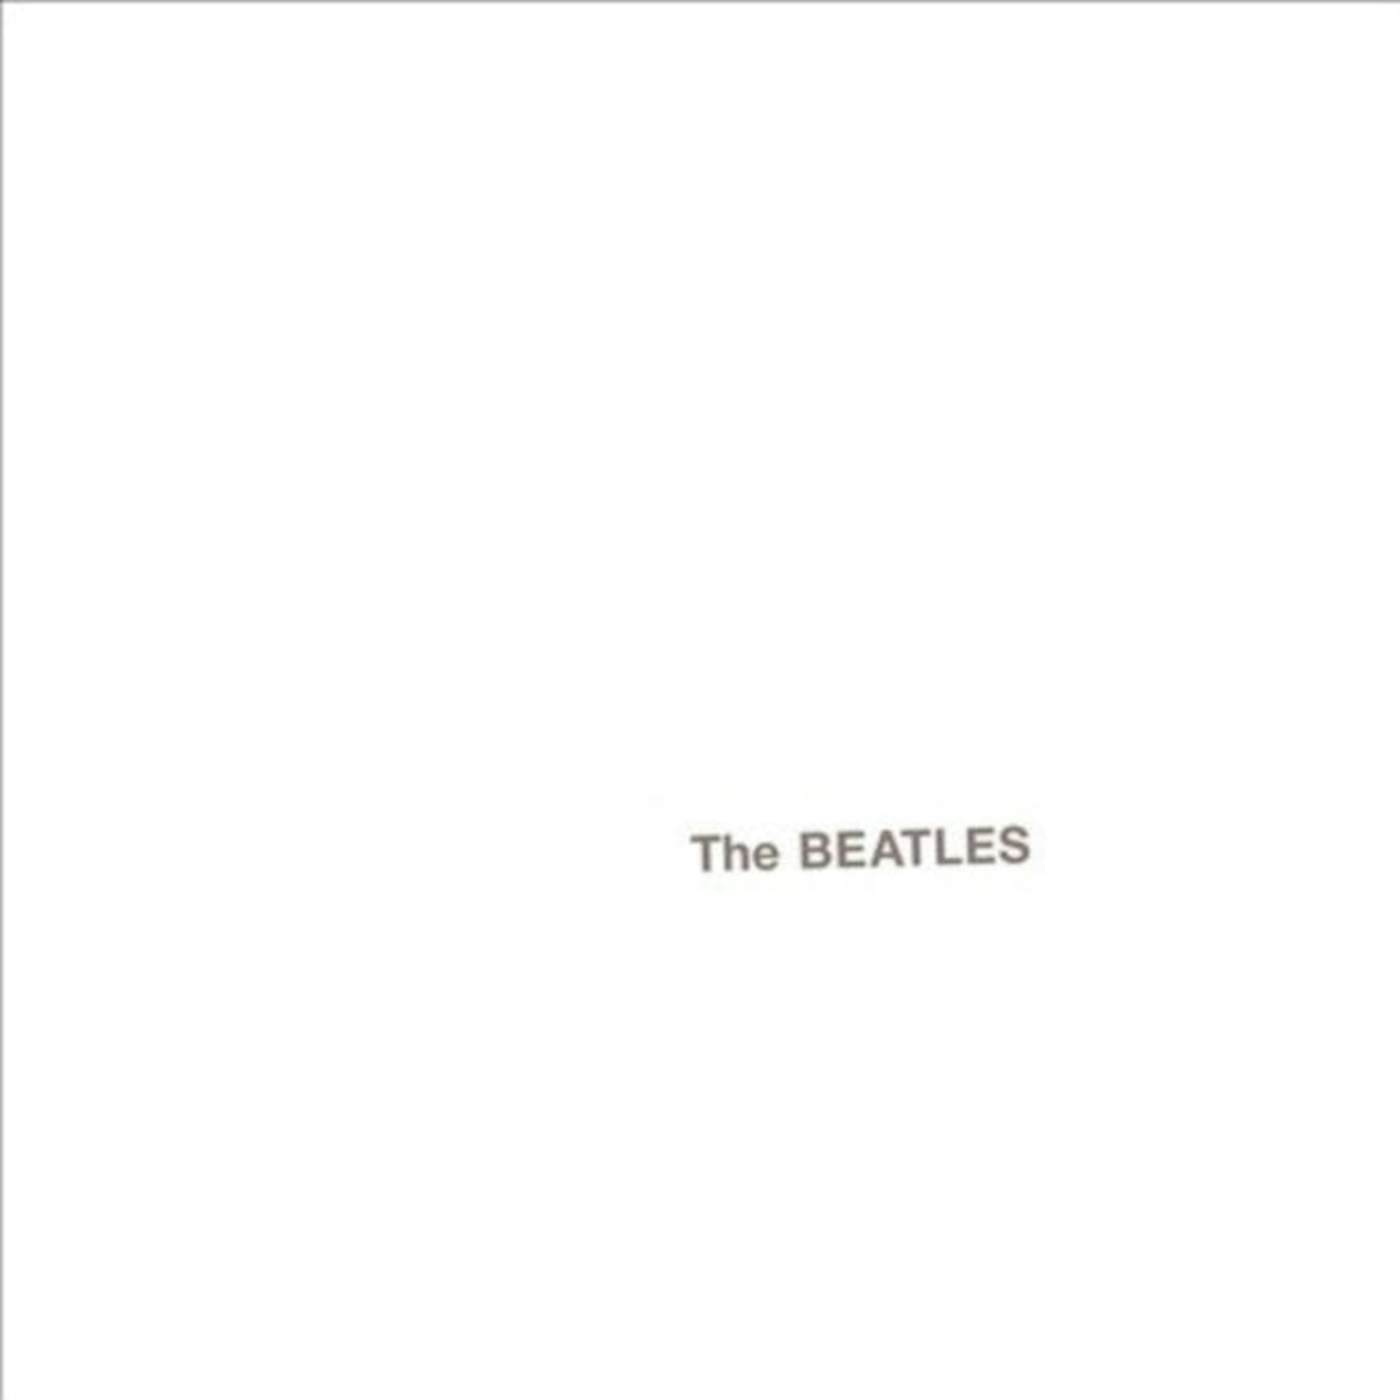 The Beatles LP Vinyl Record - The Beatles (White Album)